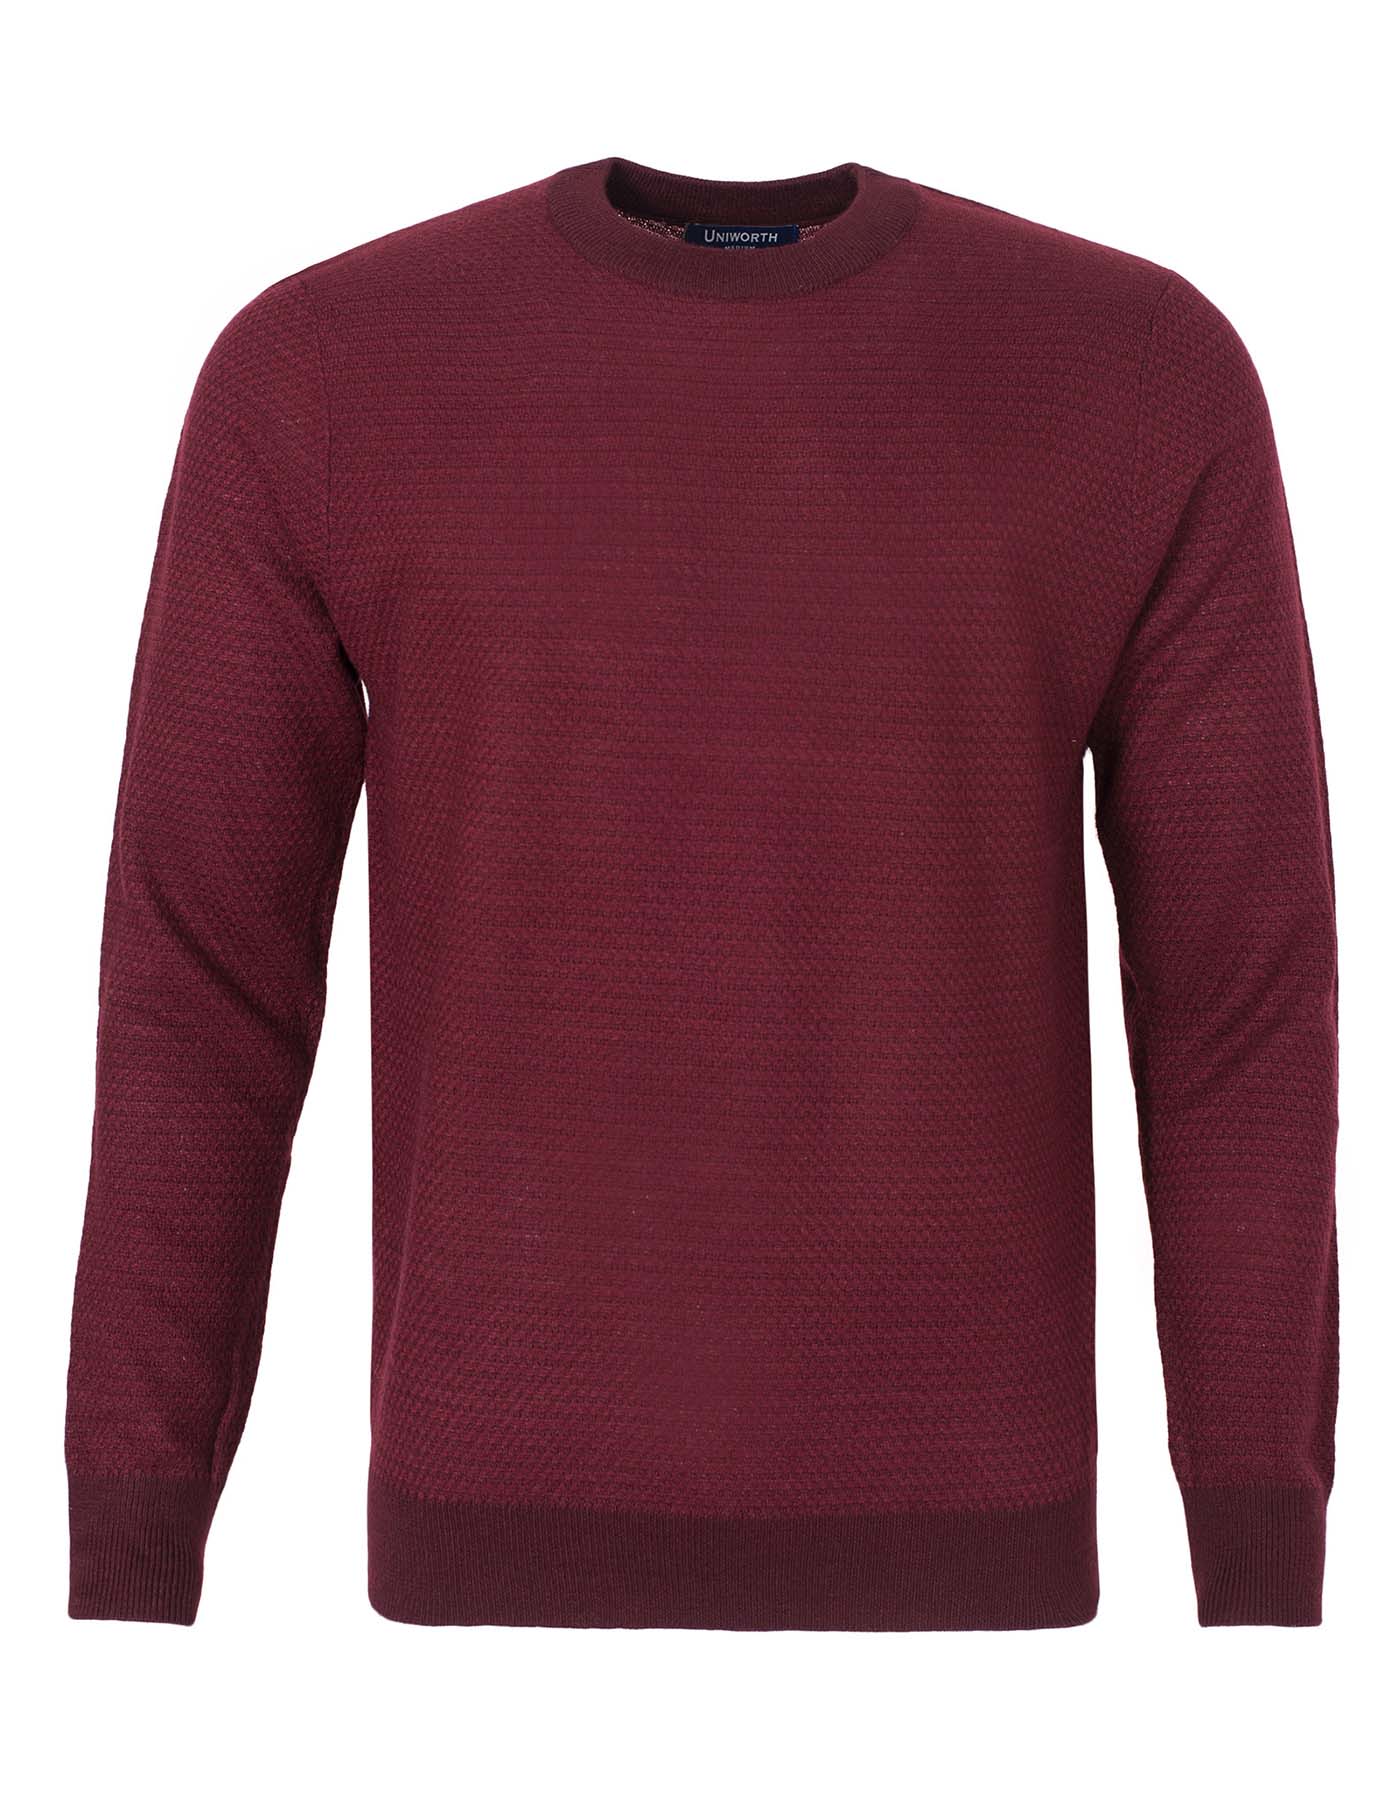 Burgundy Texture Full Sleeve Sweater